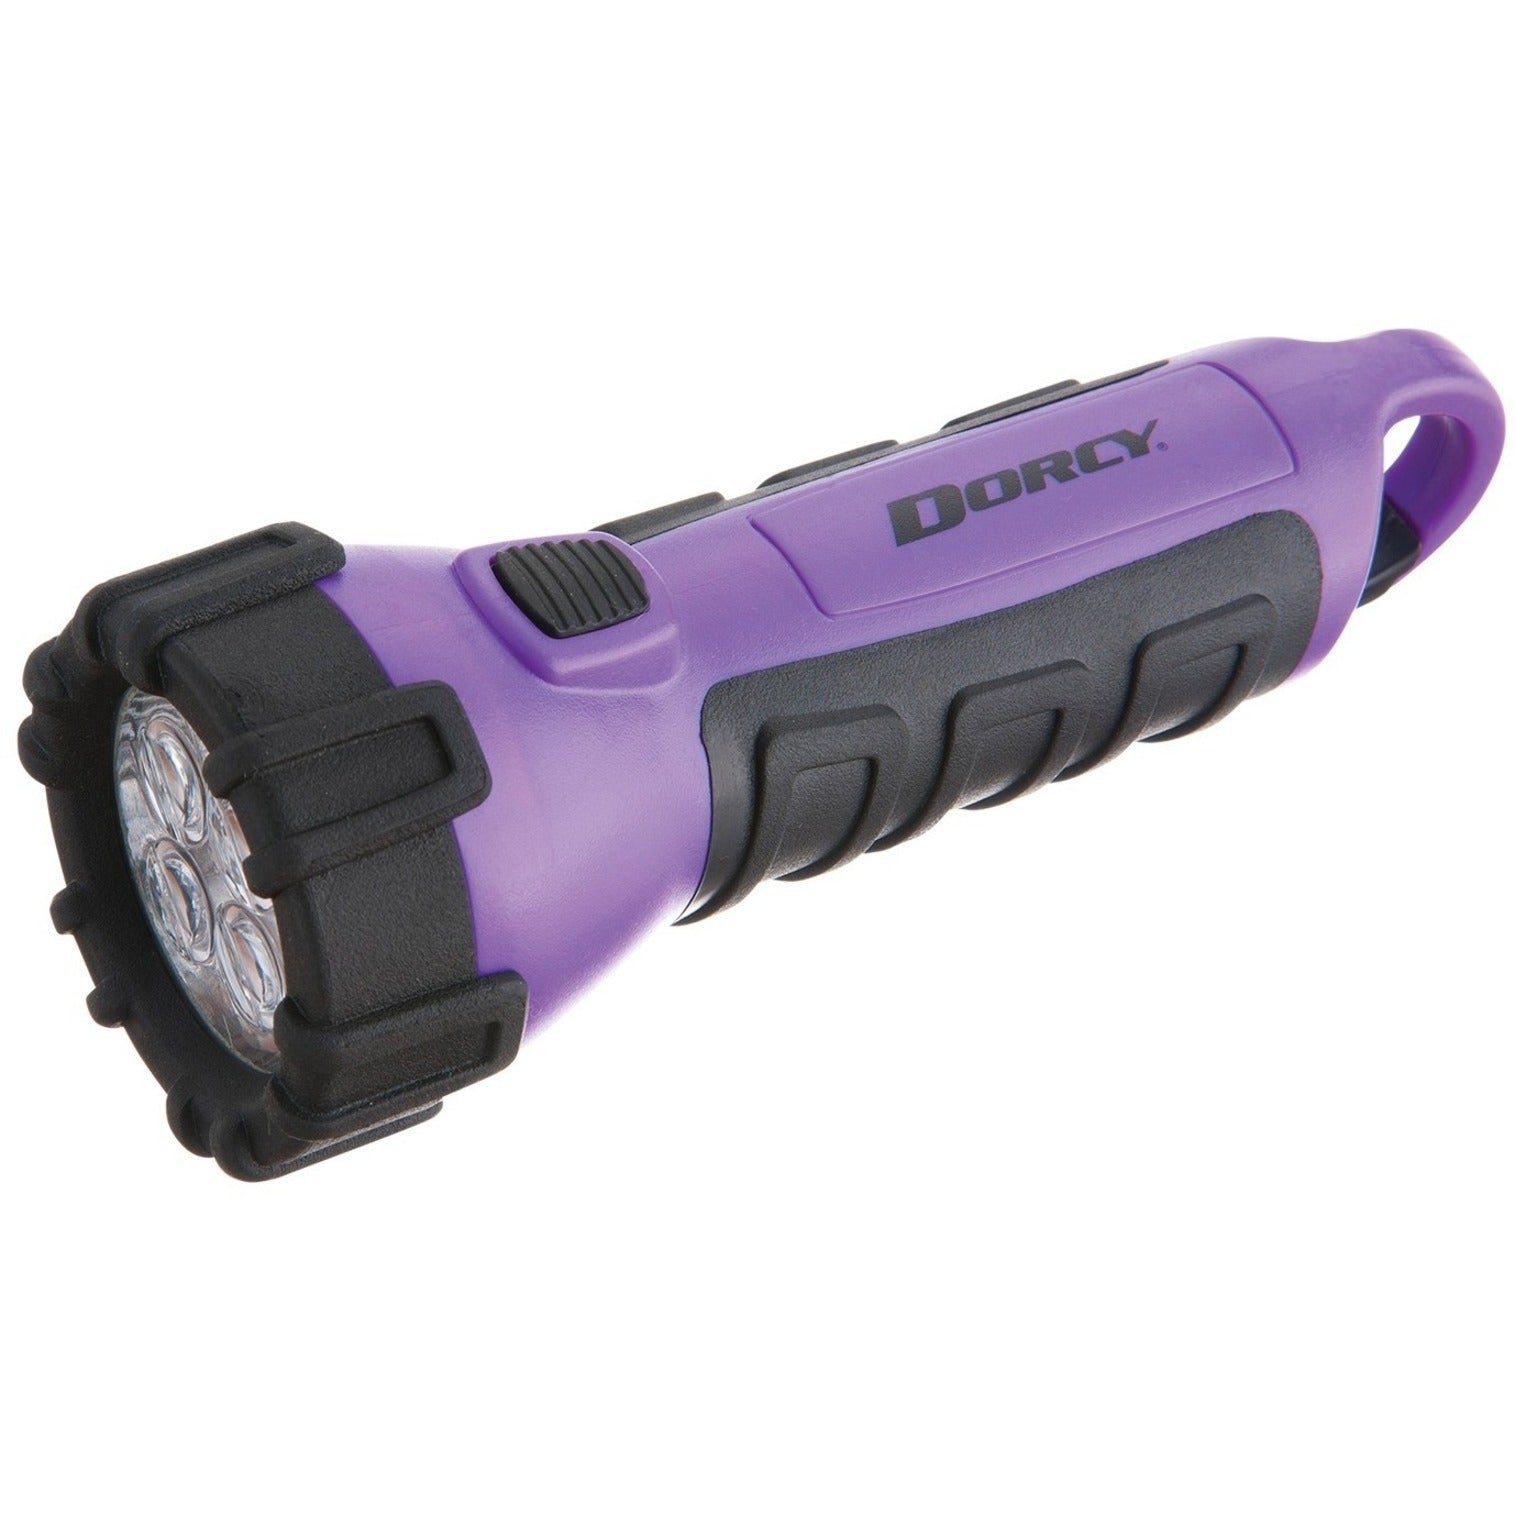 Dorcy 41-2508 55 Lumen Purple Floating Flashlight, Water Proof, Shock Absorbing, Slip Resistant, Battery Powered